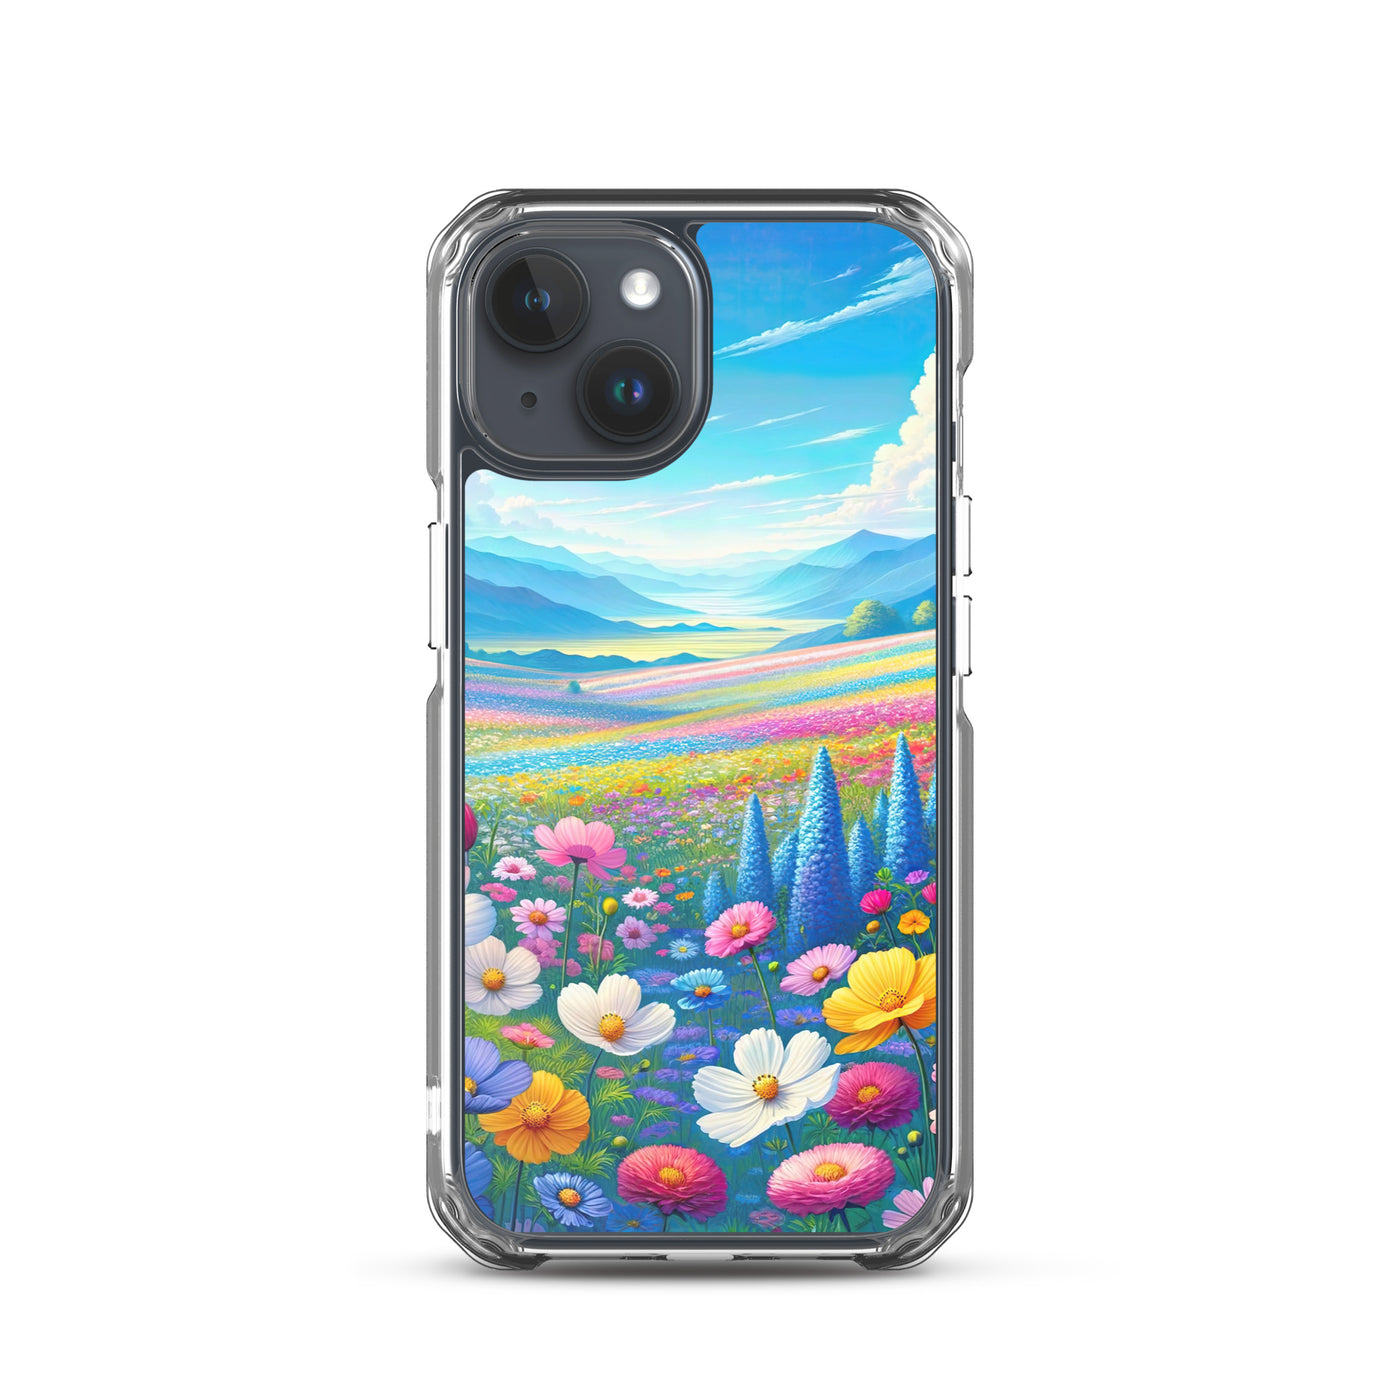 Weitläufiges Blumenfeld unter himmelblauem Himmel, leuchtende Flora - iPhone Schutzhülle (durchsichtig) camping xxx yyy zzz iPhone 15